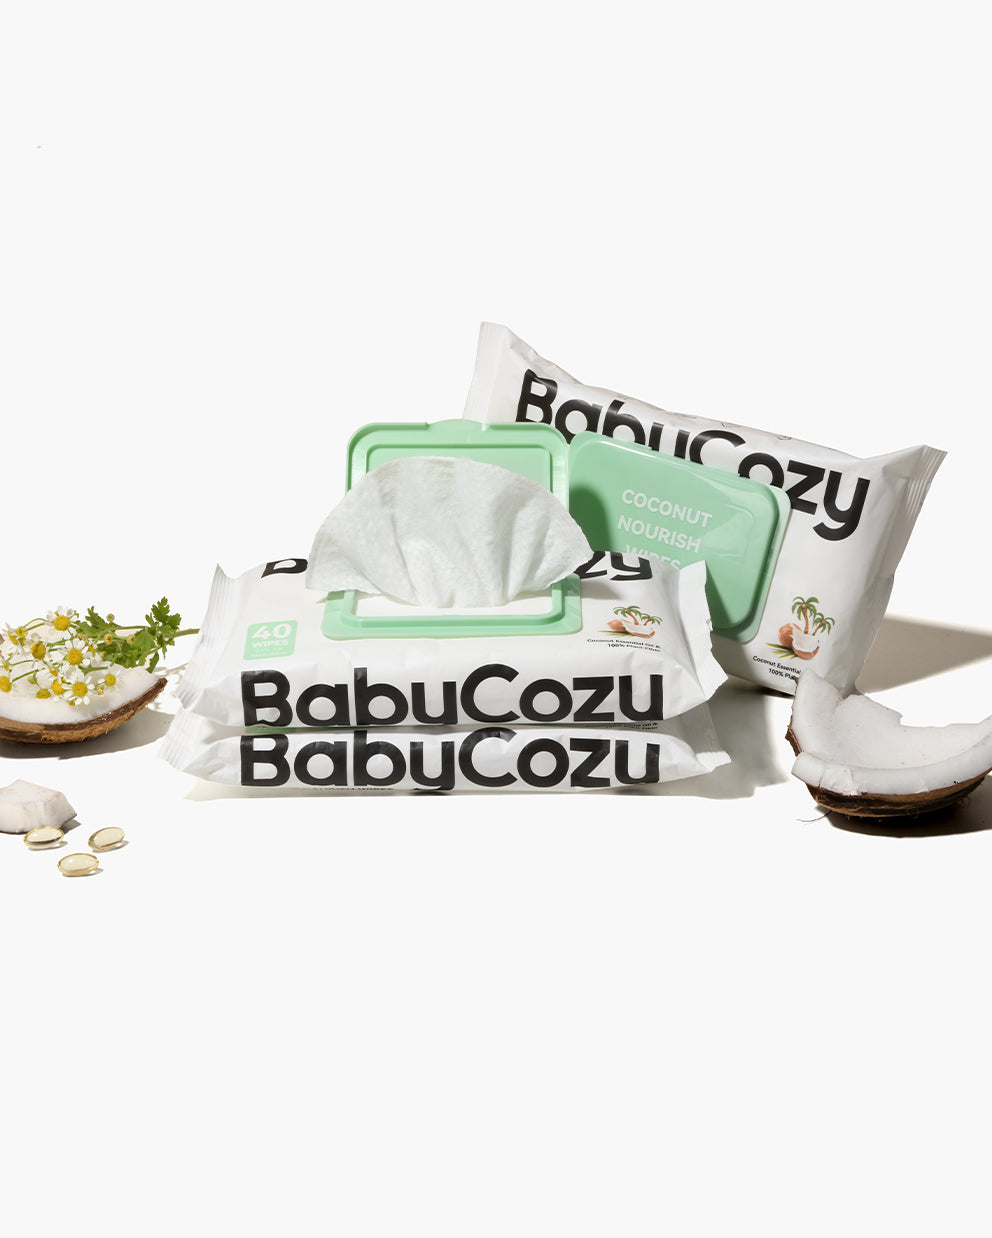 Momcozy introduces baby-centered brand, BabyCozy, through